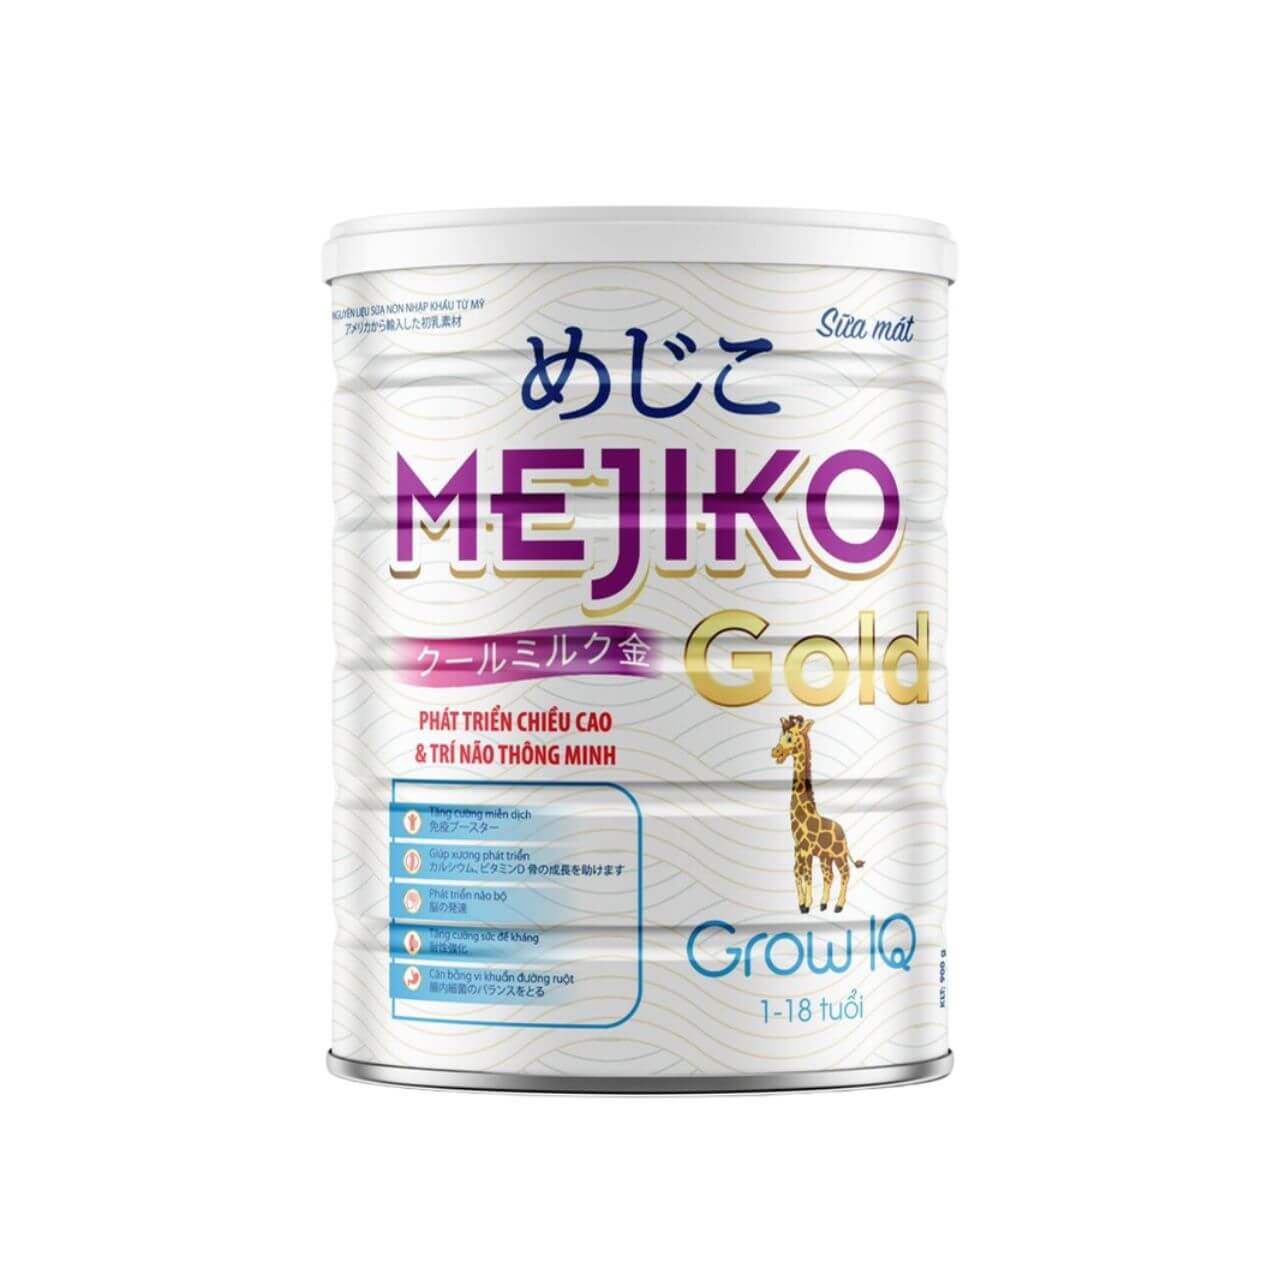 Sữa Mejiko Gold Grow IQ